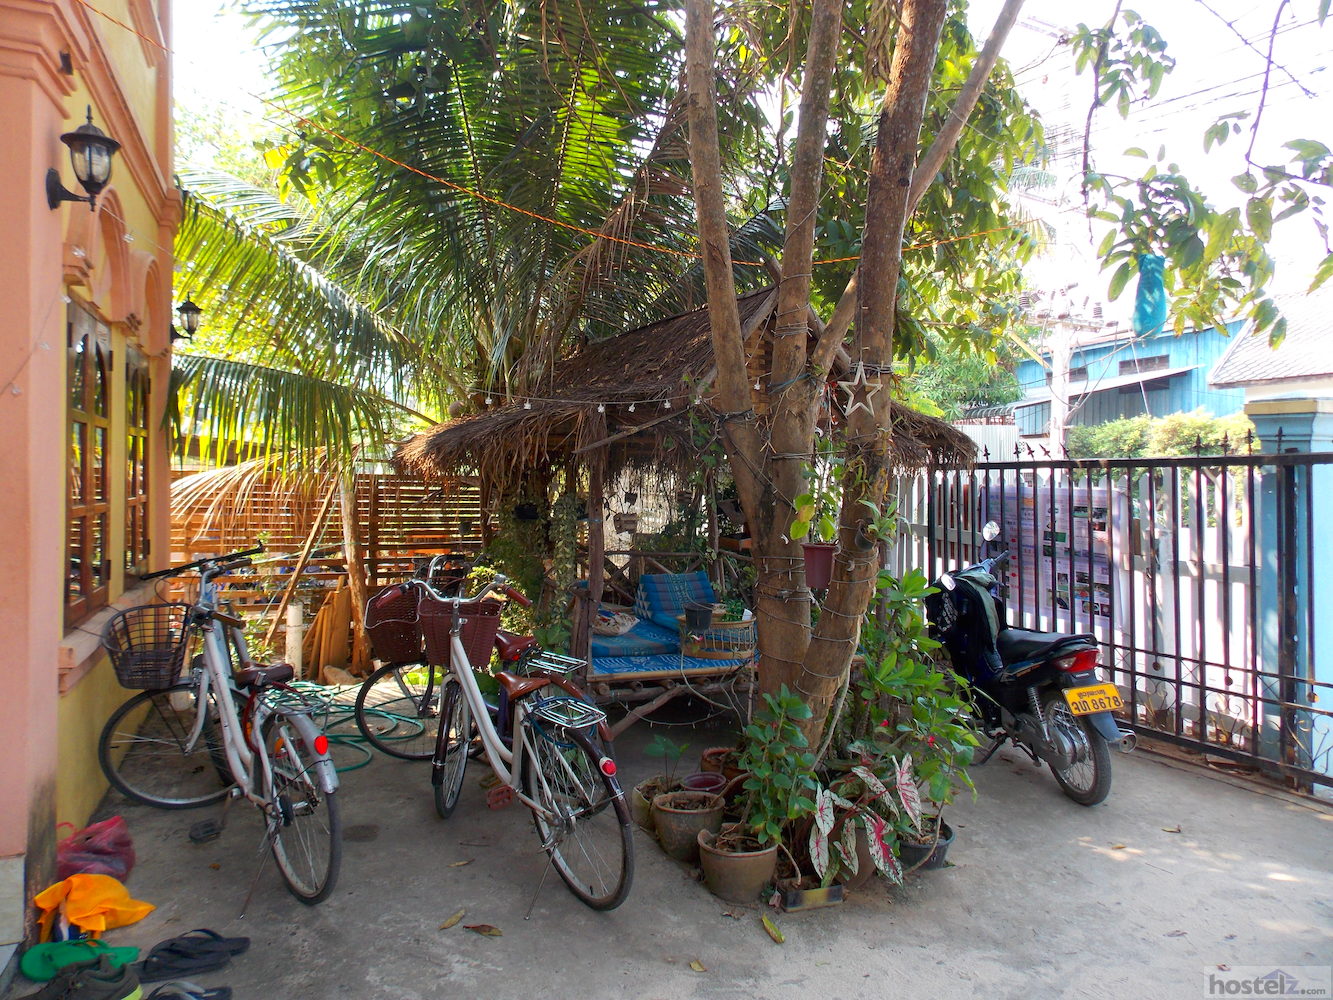 One Tree Guesthouse, Luang Prabang